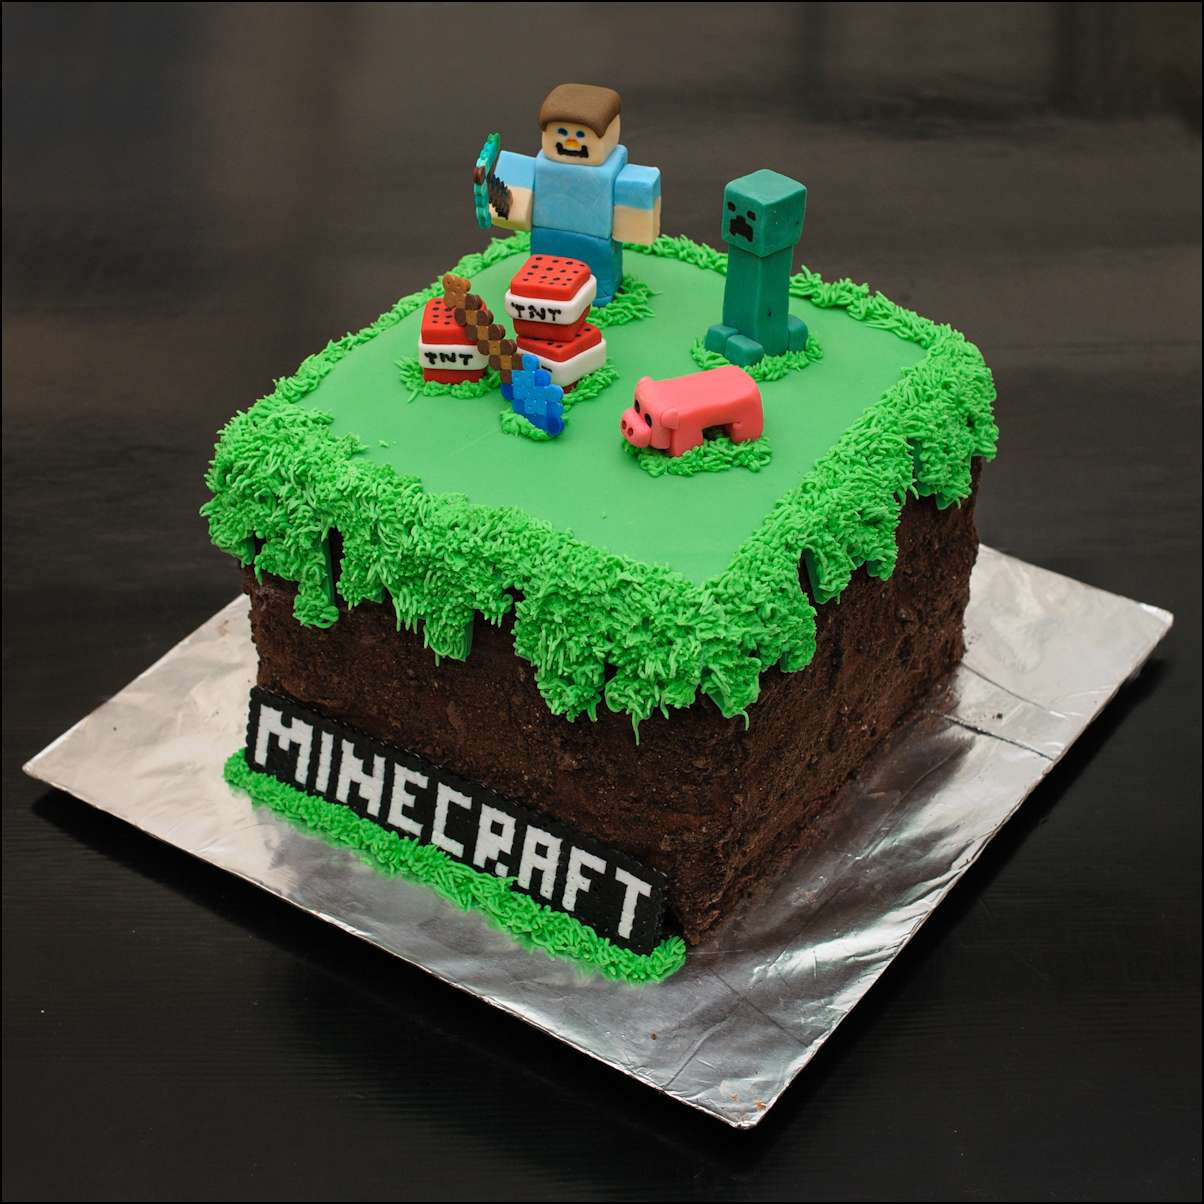 Best ideas about Minecraft Birthday Cake
. Save or Pin Minecraft Cake Now.